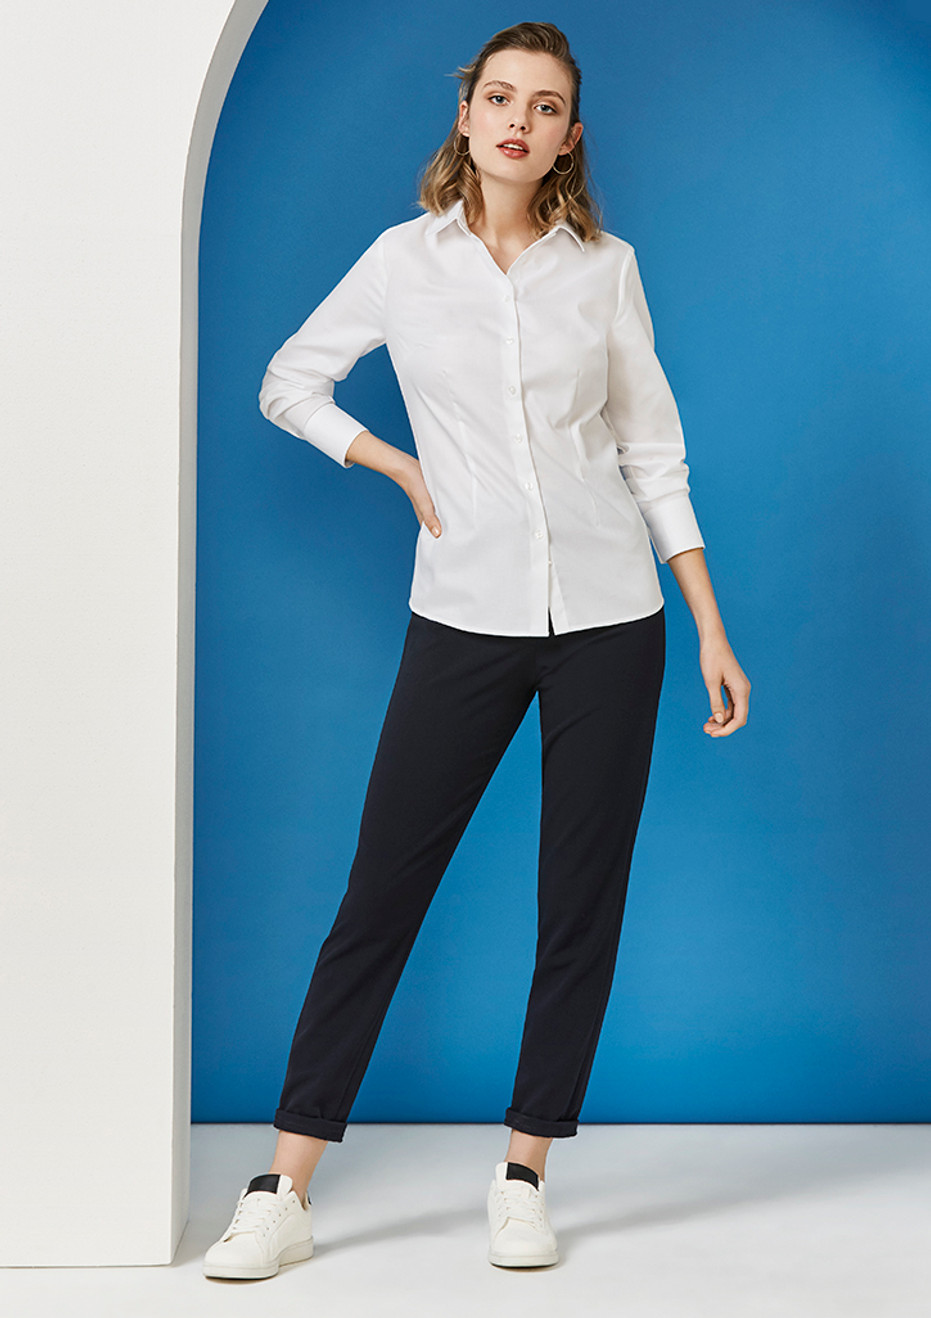 Biz Collection S912LL Ladies Regent Long Sleeve Shirt | Available Colours: Blue, White